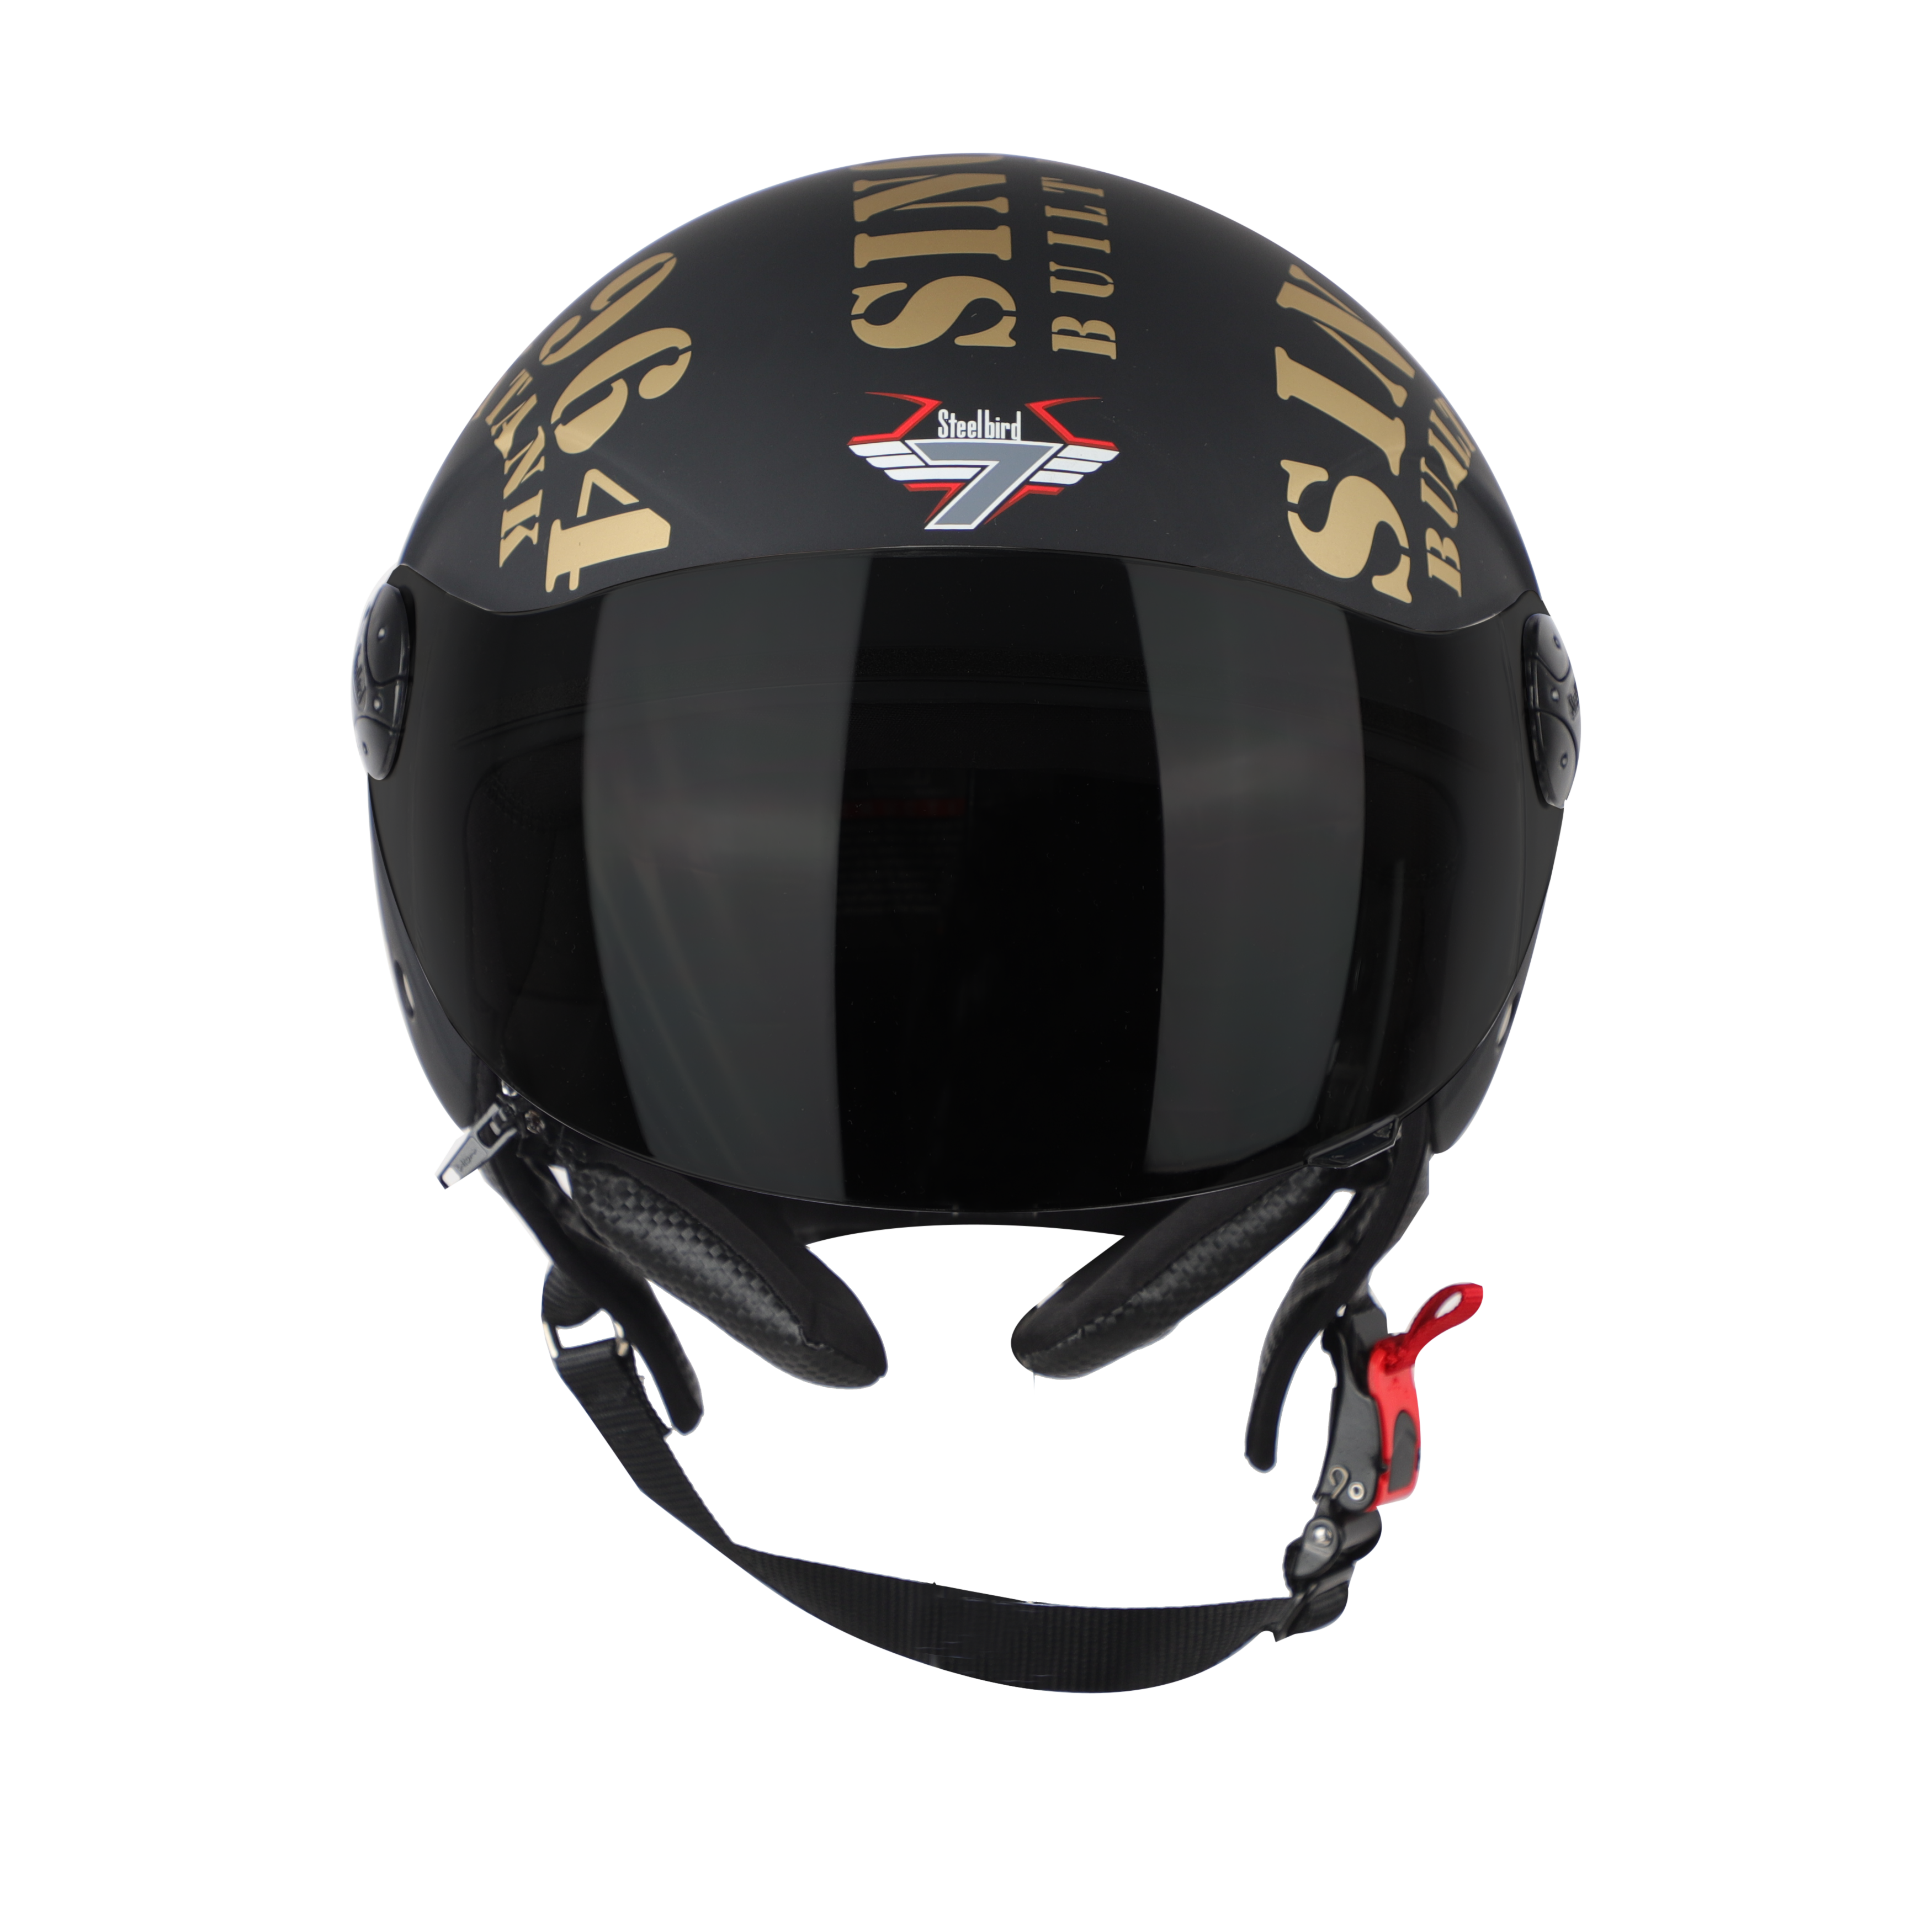 Steelbird SB-02 Tank Full Face ISI Certified Graphic Helmet (Matt Black Gold With Smoke Visor)